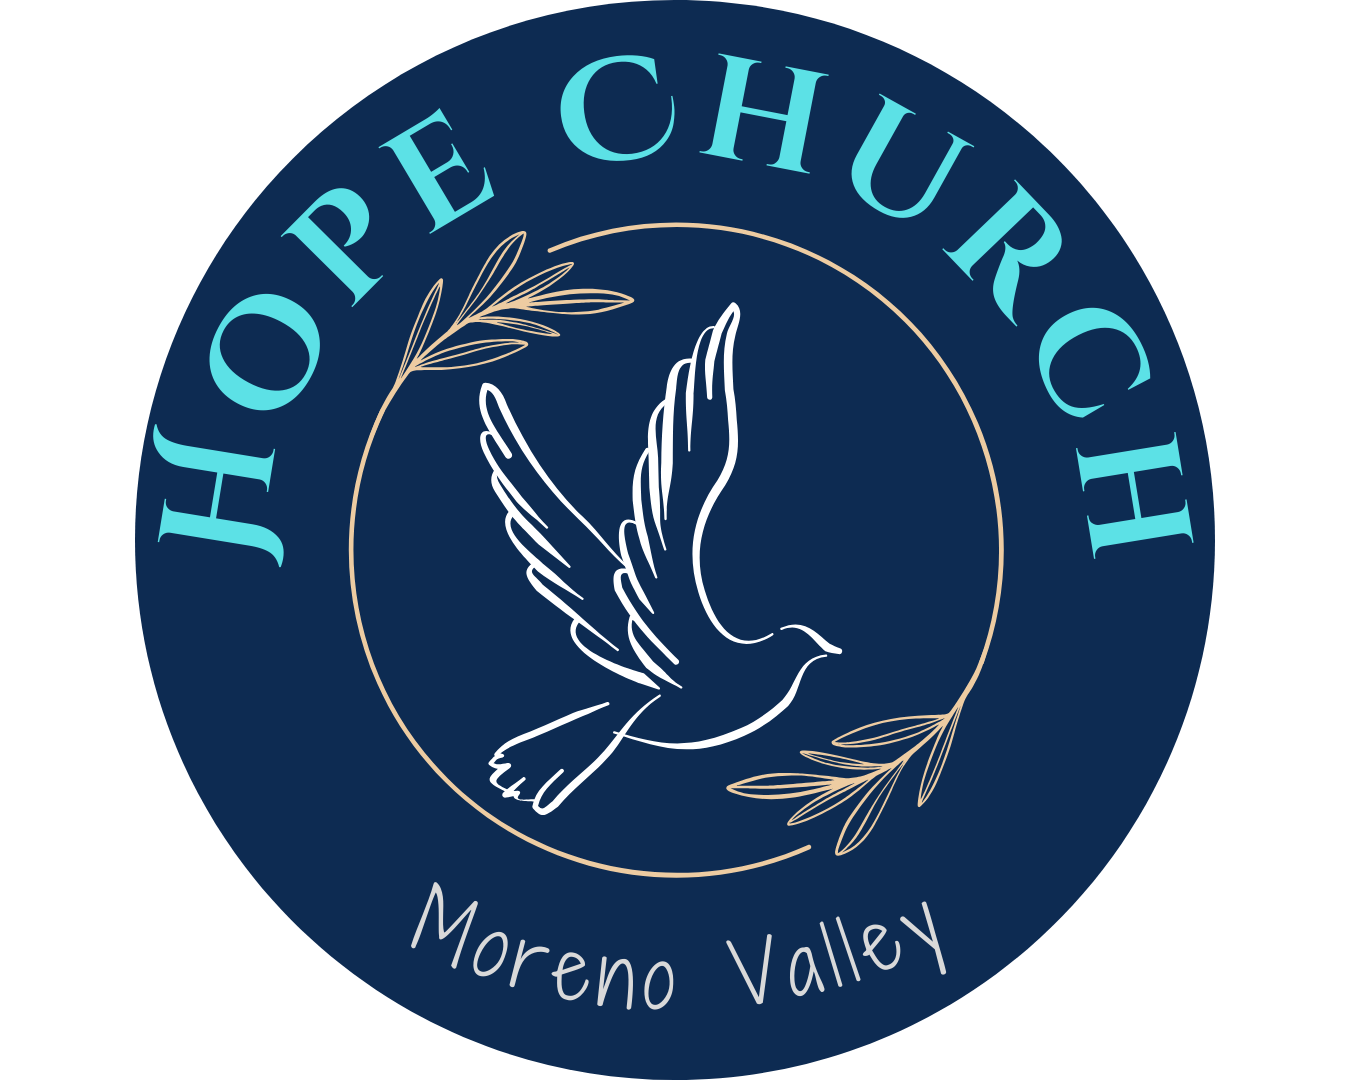 Hope Church Moreno Valley